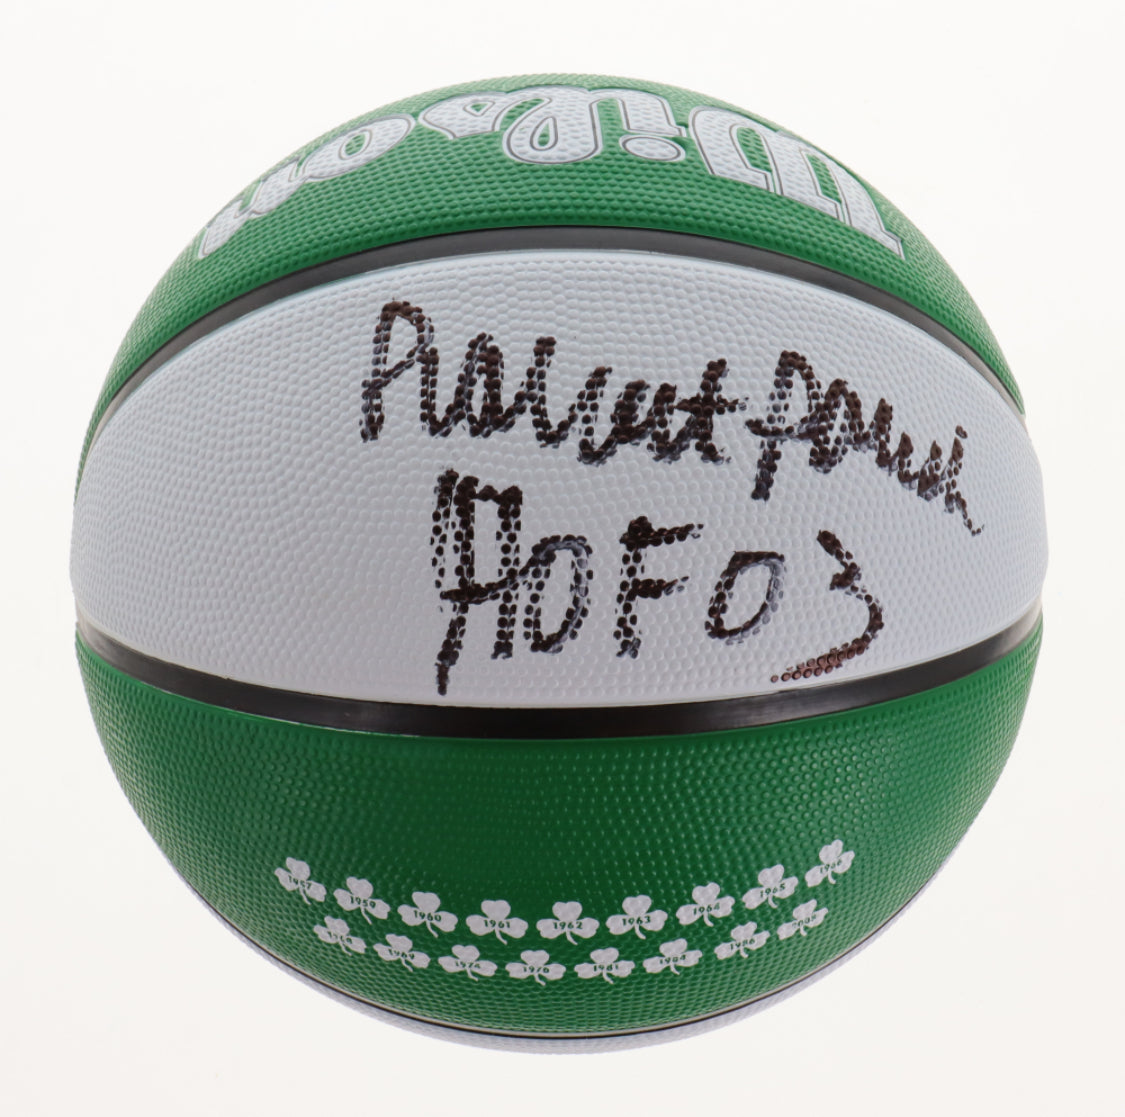 Robert Parish Signed Celtics Logo Wilson The City Basketball Inscribed "HOF '03" (Schwartz COA)